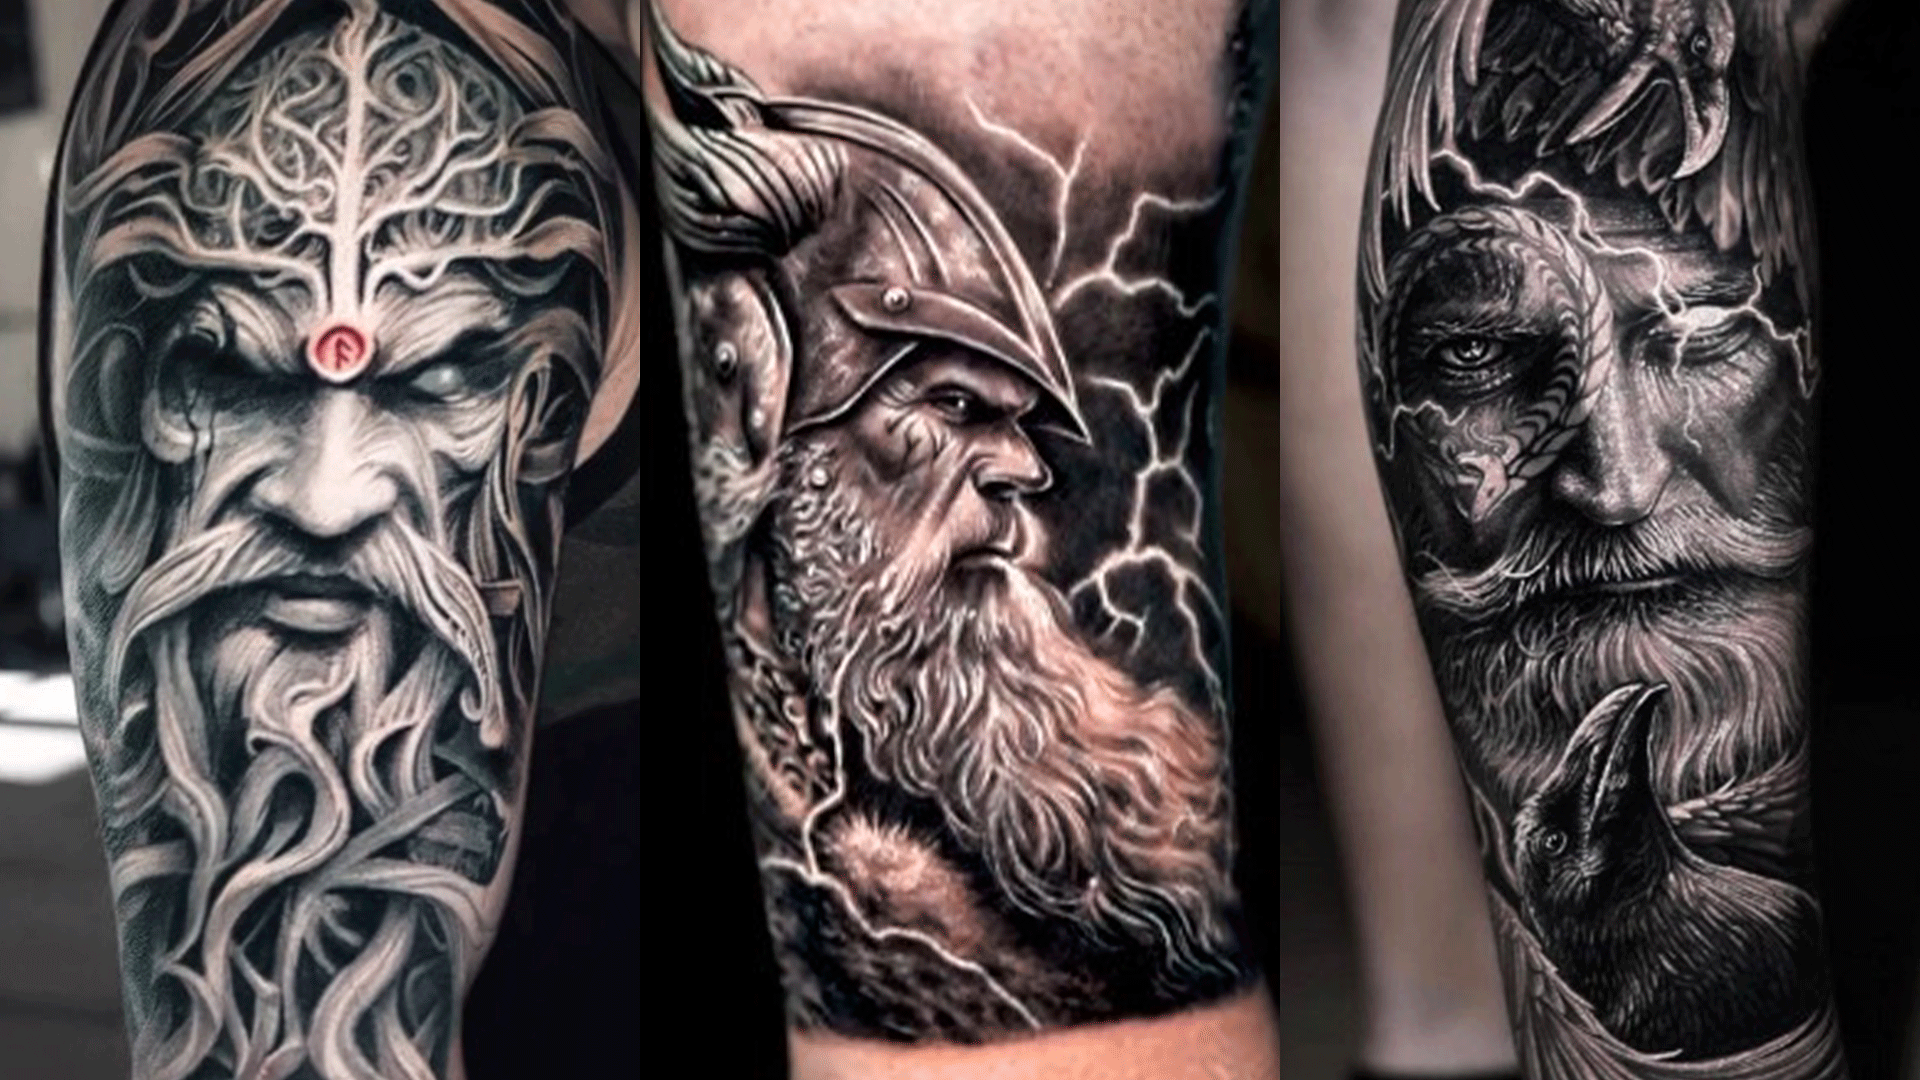 Authentic Viking Tattoos? - YouTube